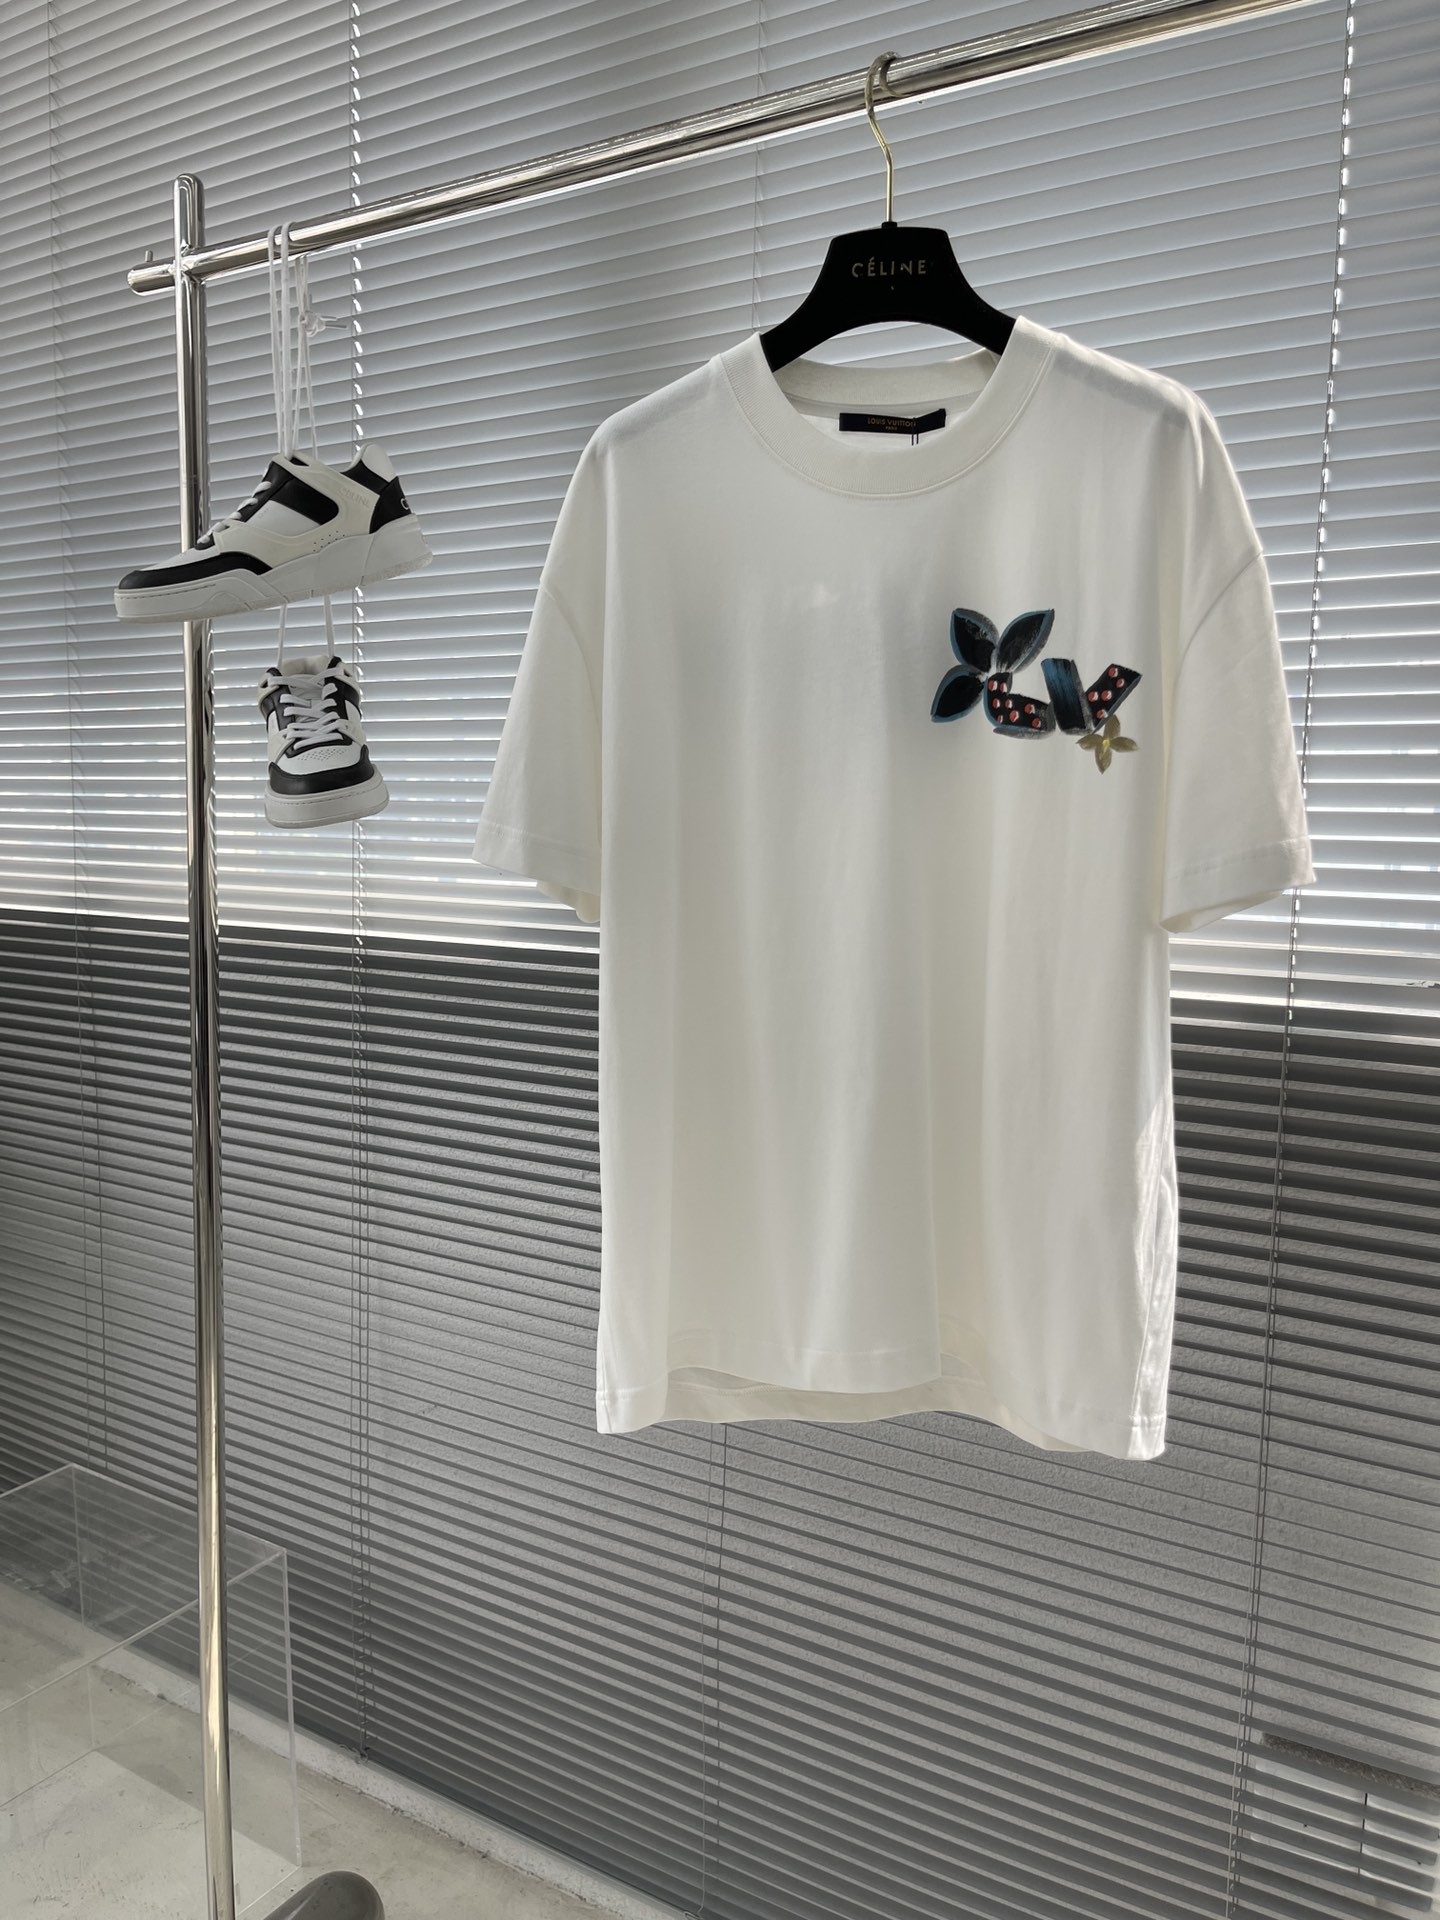 Louis Vuitton Clothing T-Shirt Replcia Cheap
 Black Doodle White Unisex Cotton Summer Collection Fashion Short Sleeve